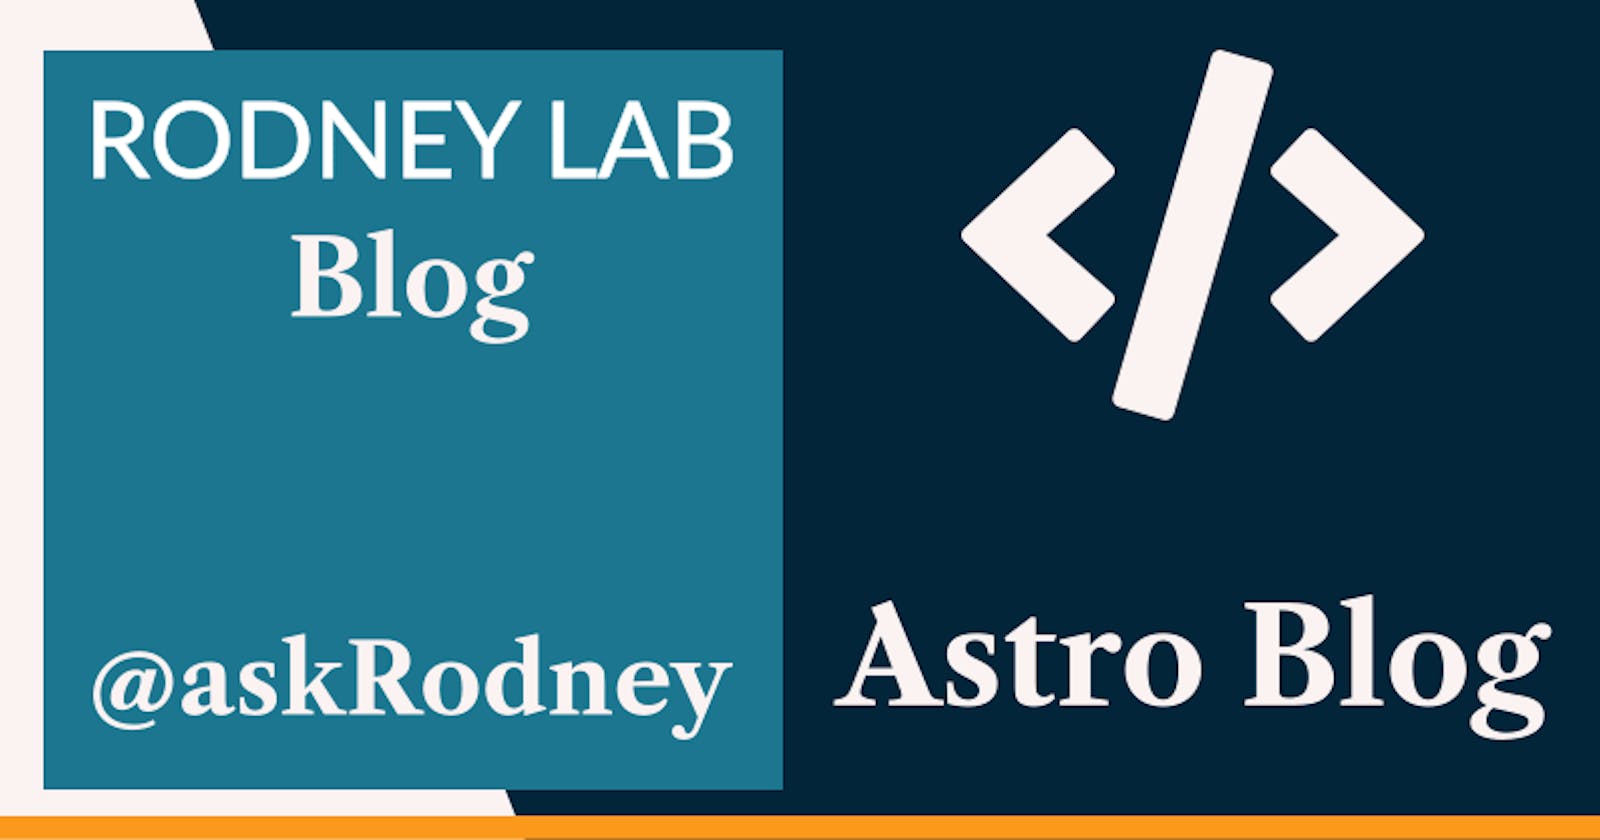 Astro Blog